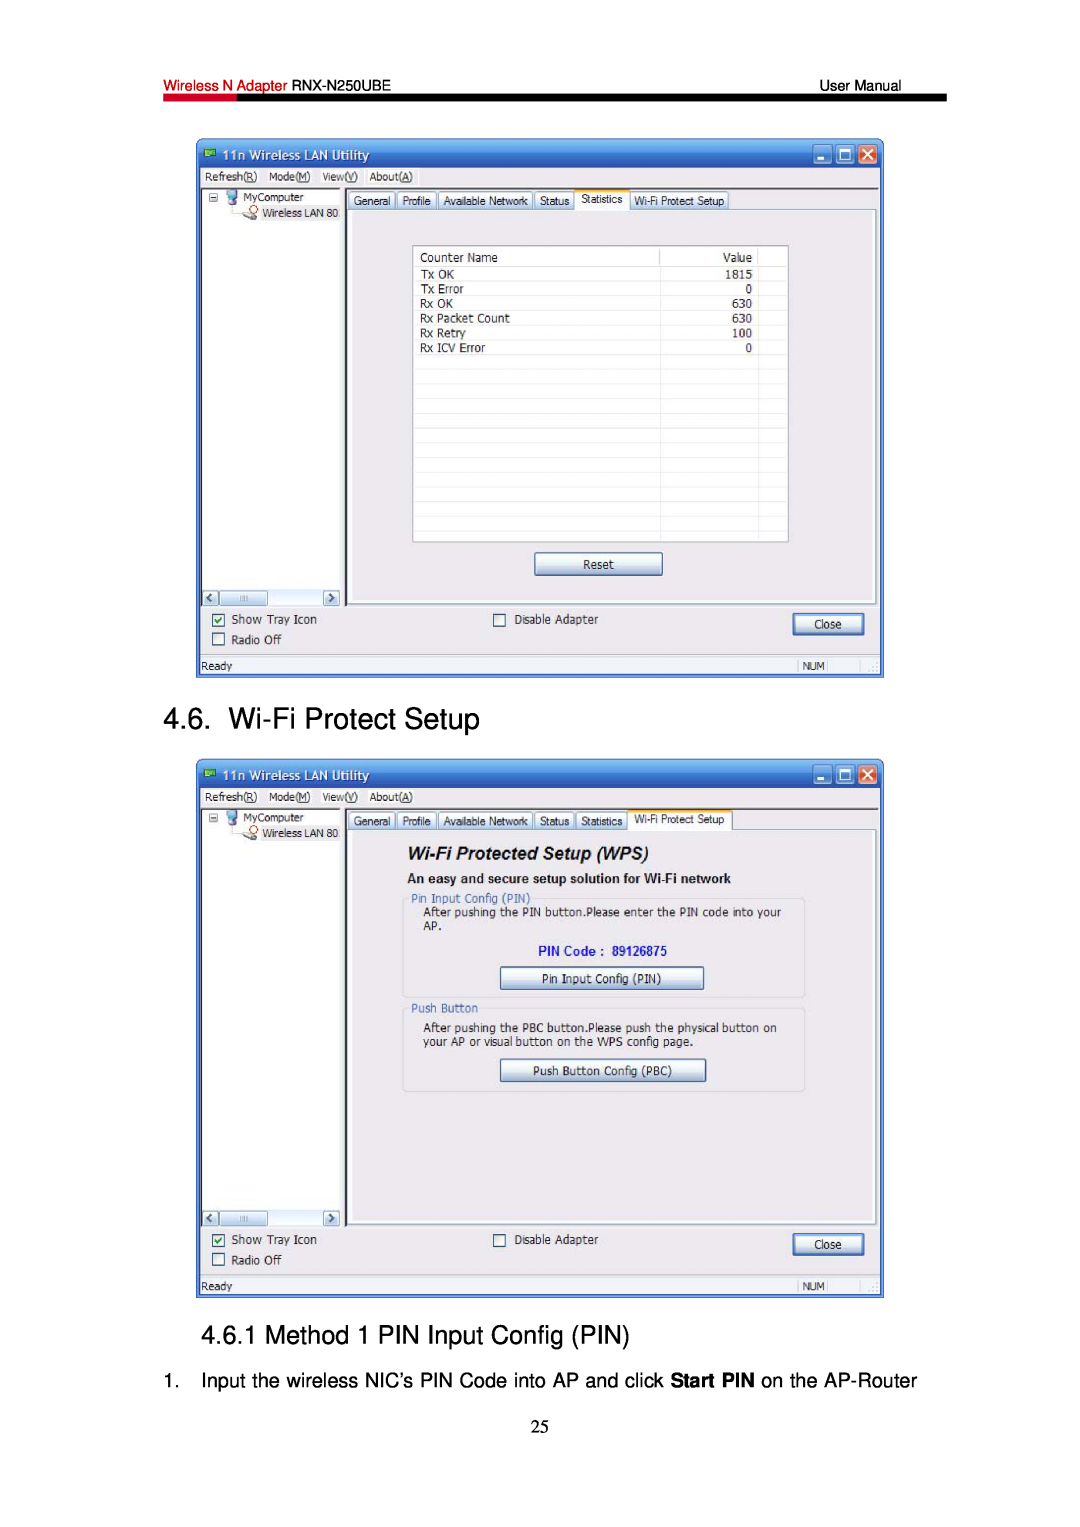 Rosewill user manual Wi-Fi Protect Setup, Method 1 PIN Input Config PIN, Wireless N Adapter RNX-N250UBE 